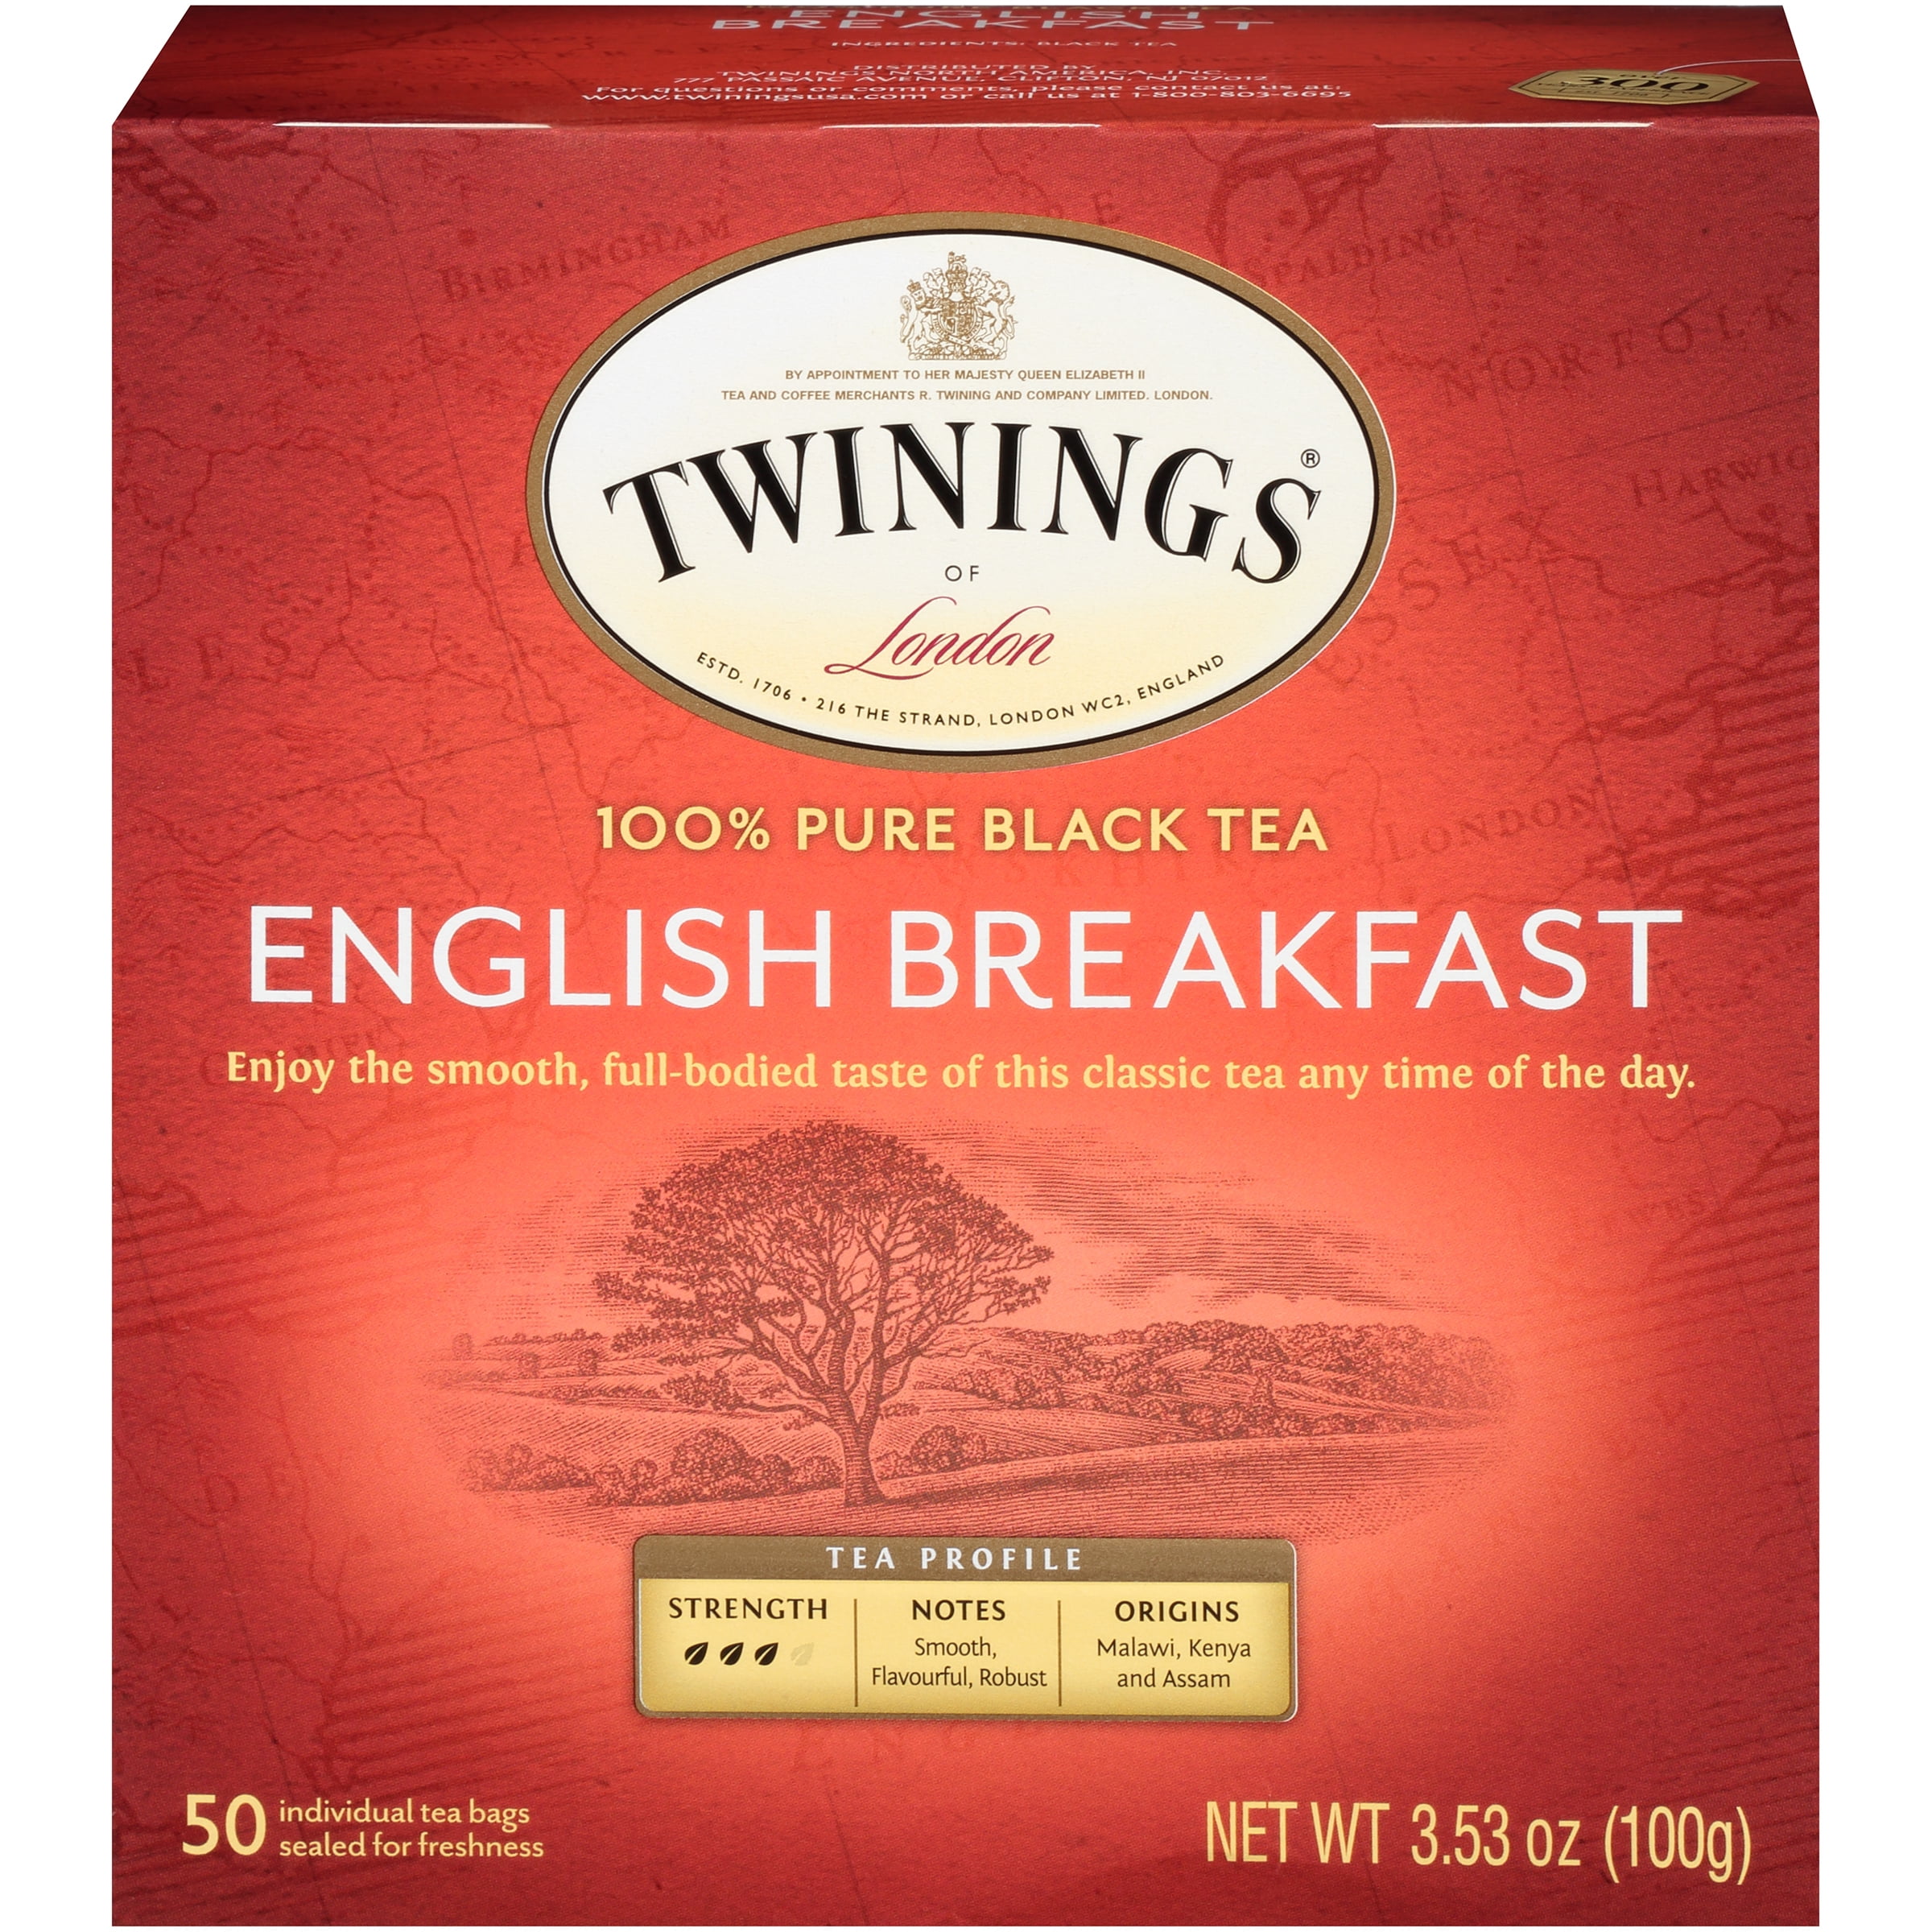 Twinings of London English Breakfast 100% Pure Black Tea Bags, 50 Count, 3.53 Oz